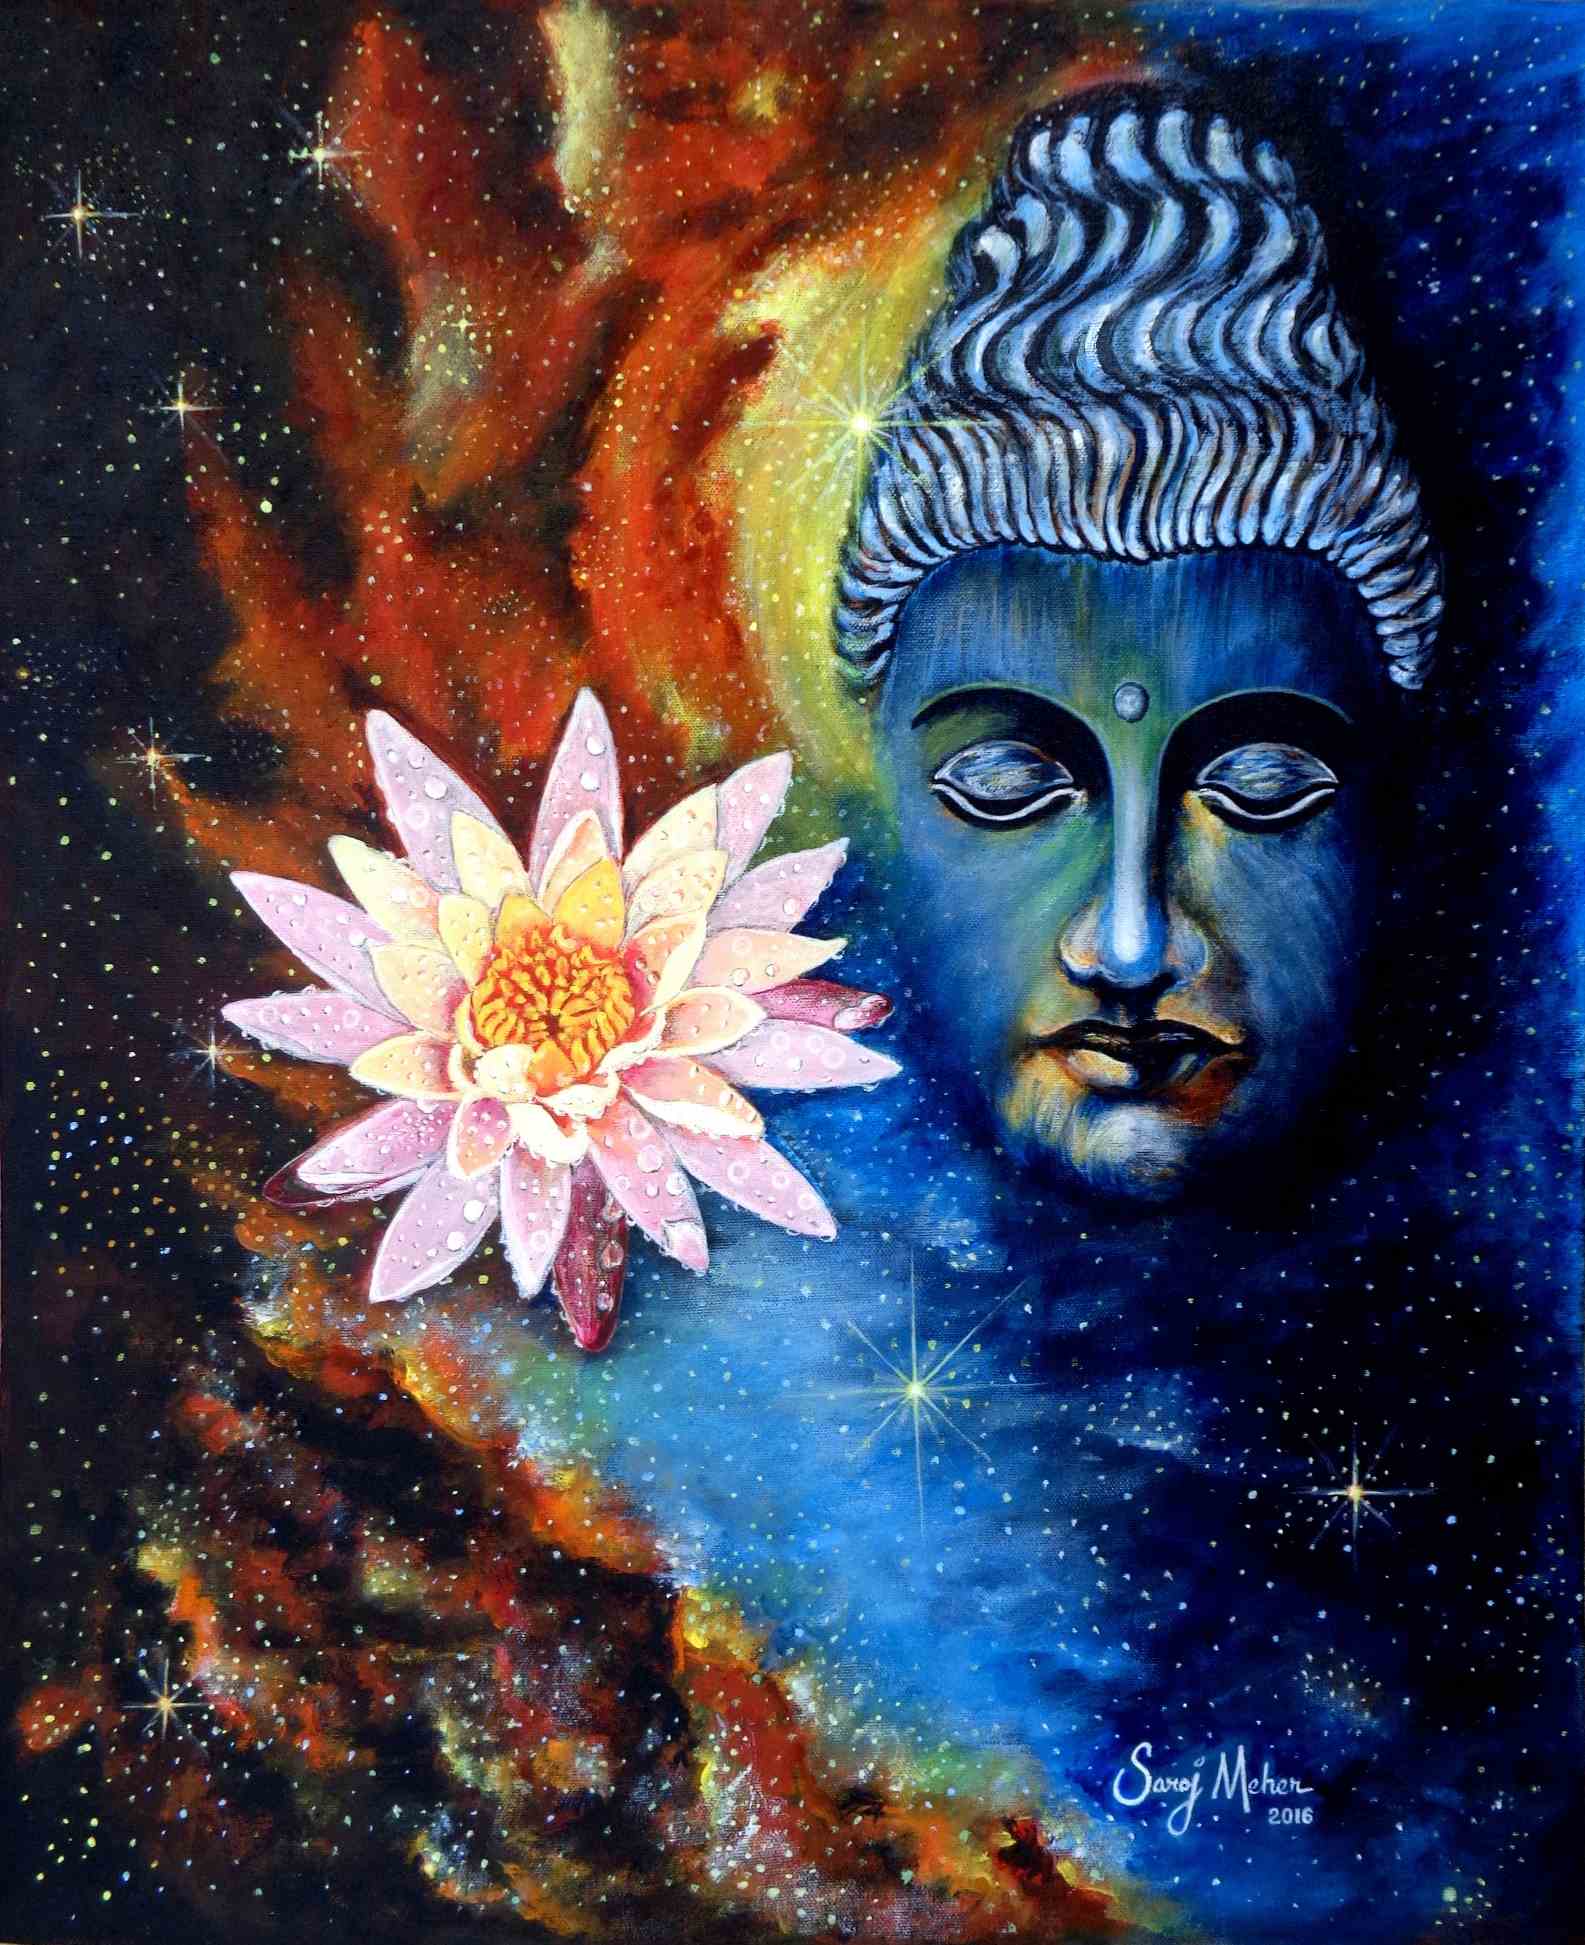 Lord Buddha 1 - Original Acrylic Painting - 20 x 24 inch - by Saroj Meher